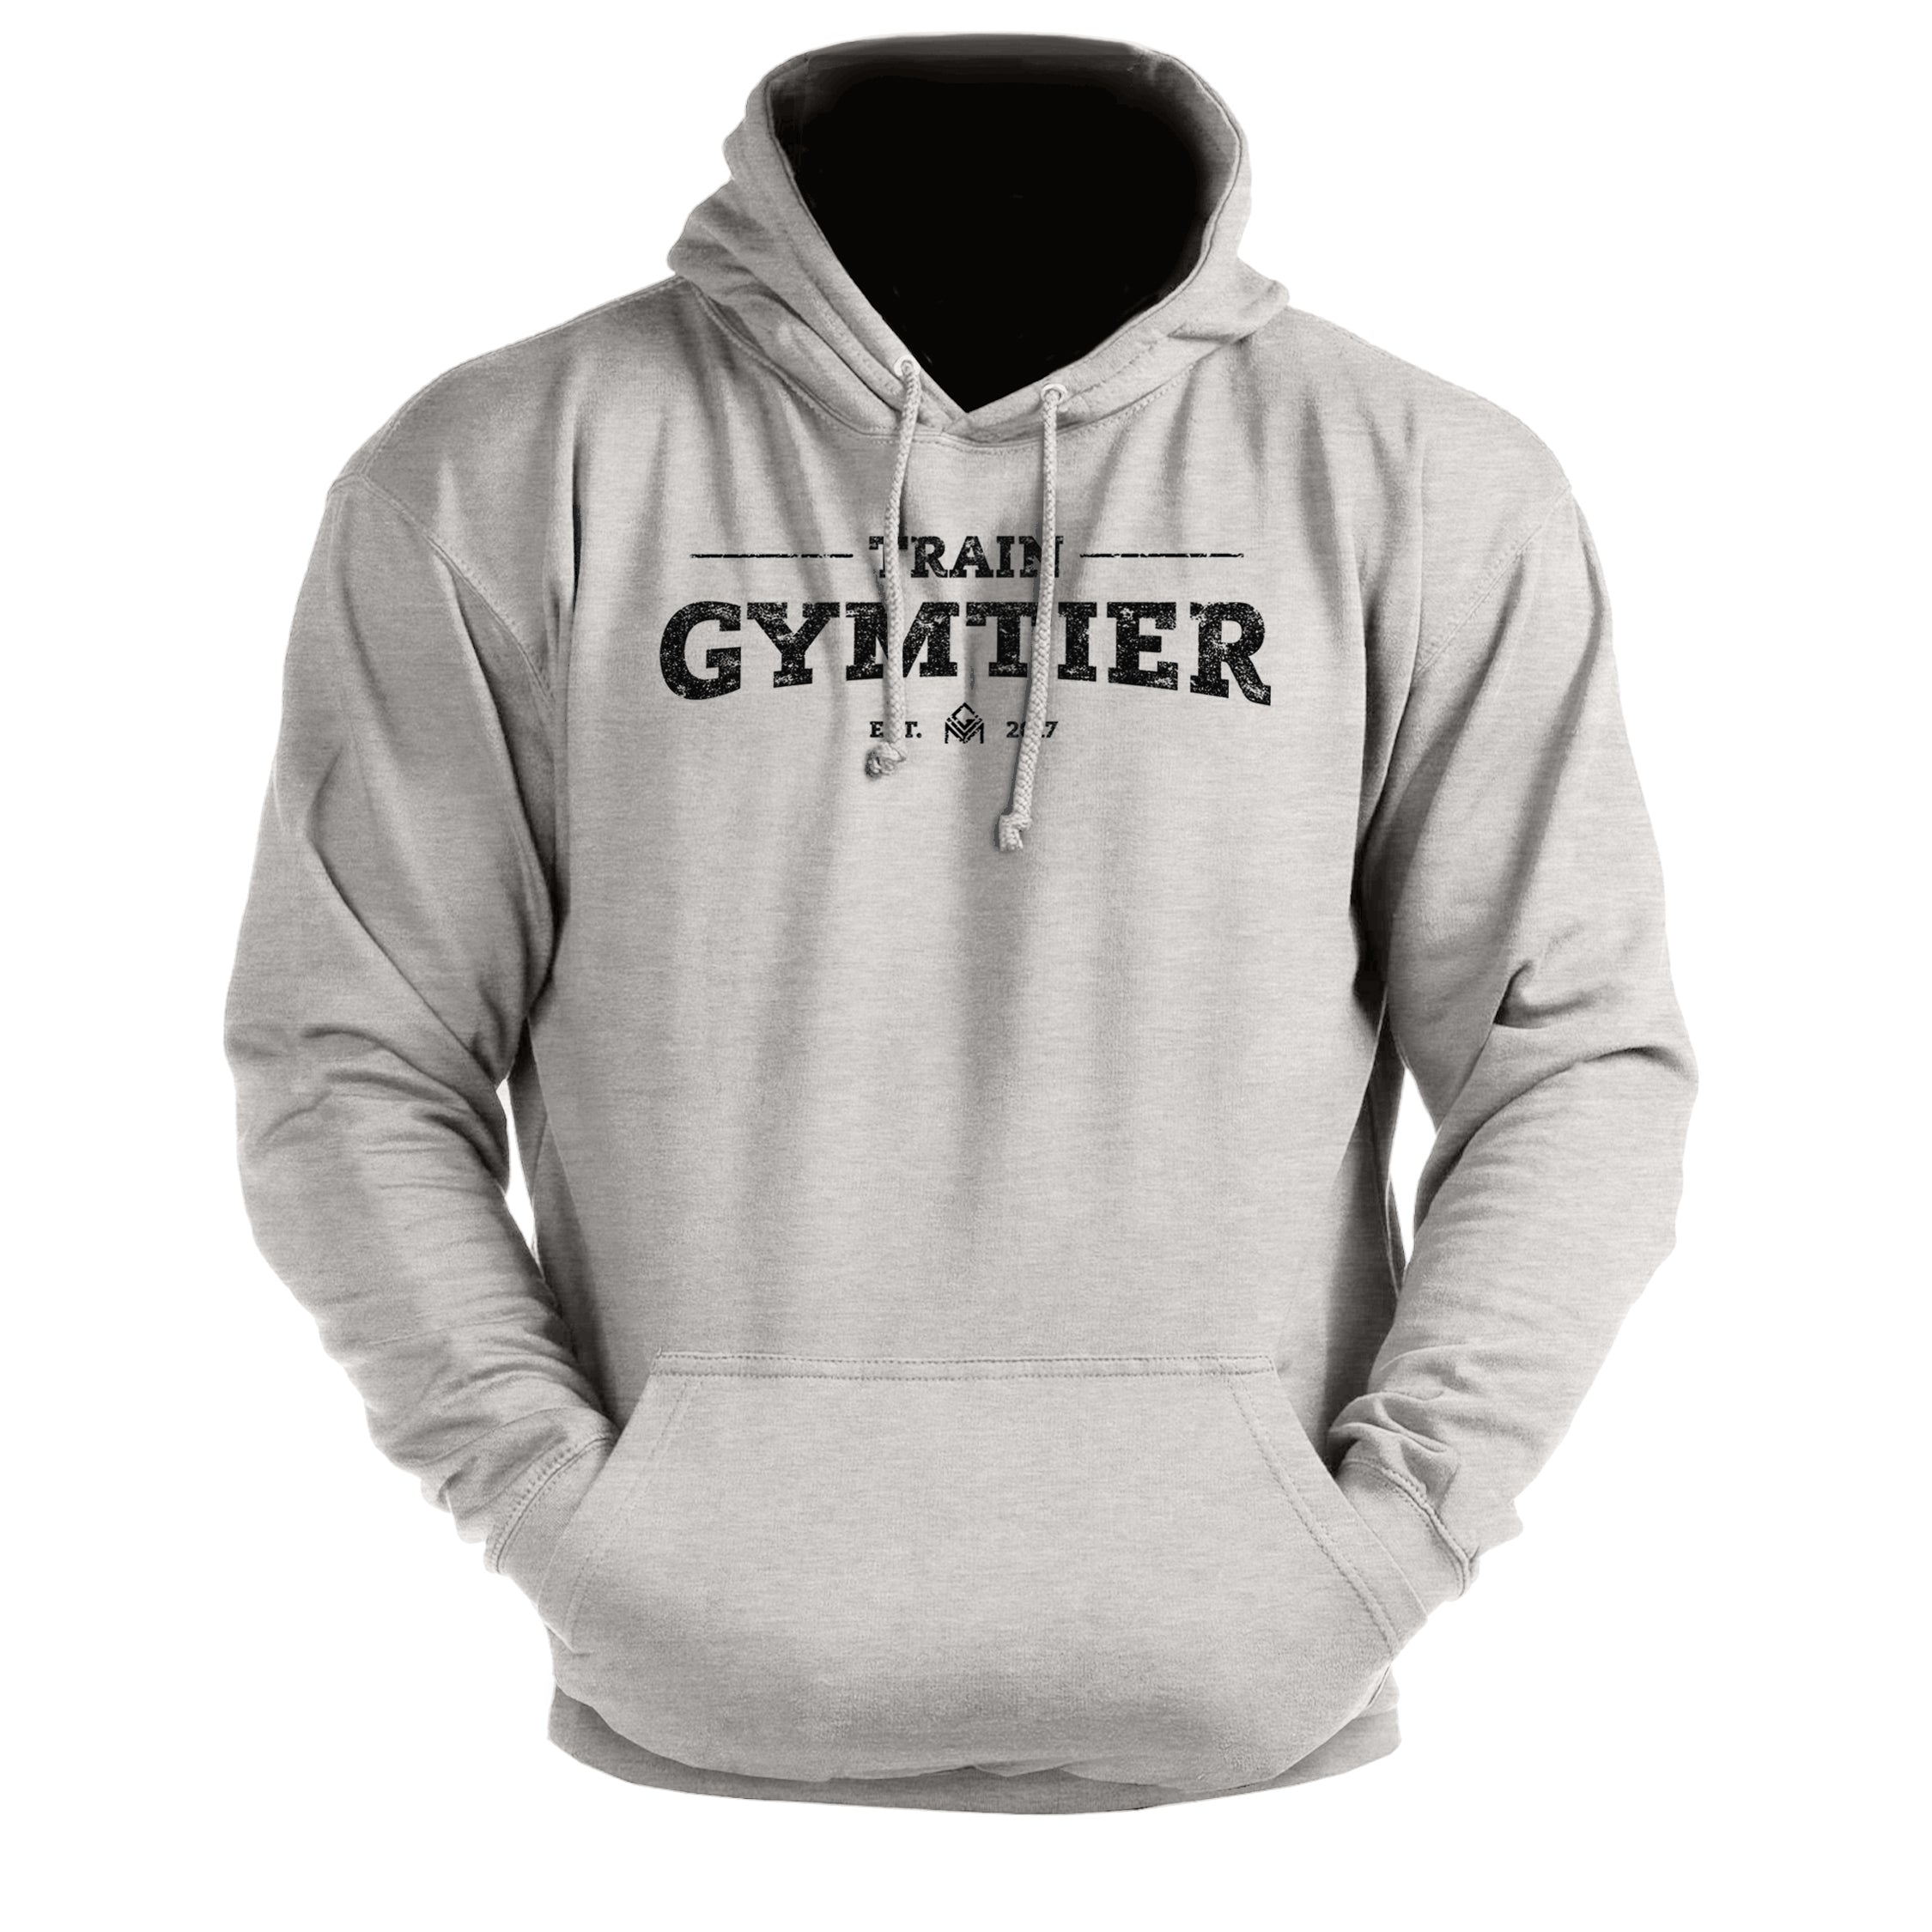 Train GYMTIER - Gym Hoodie